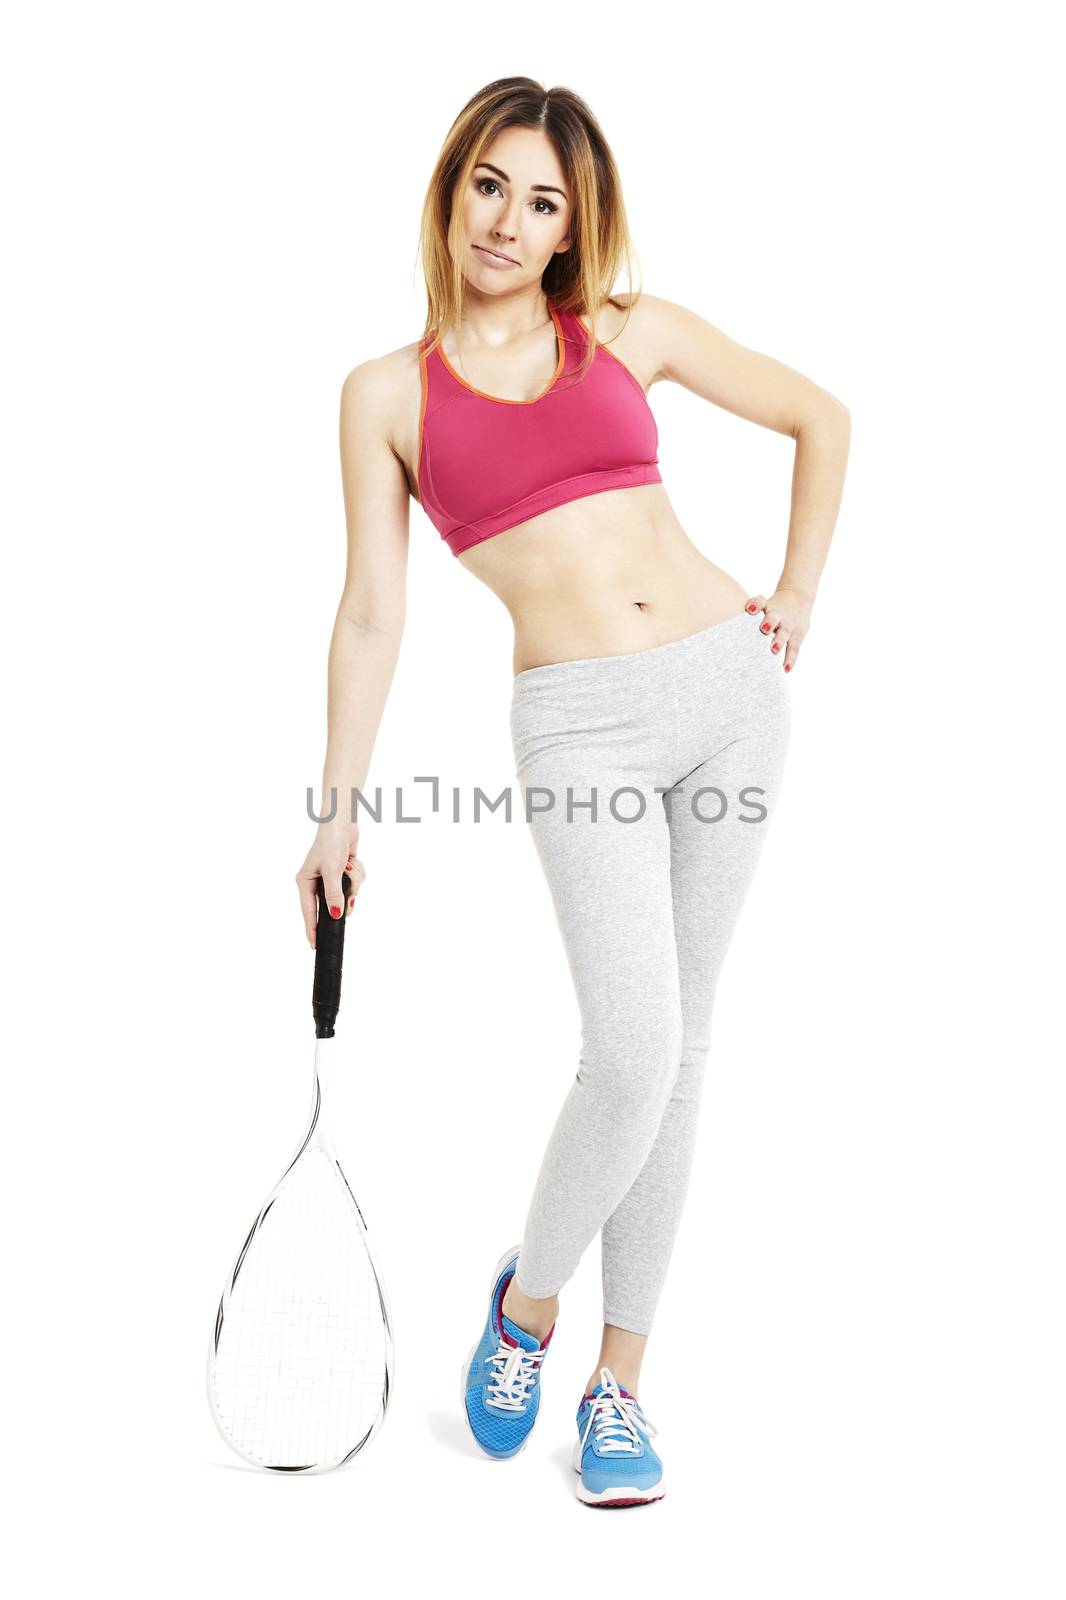 Sportswoman with a tennis racket by filipw